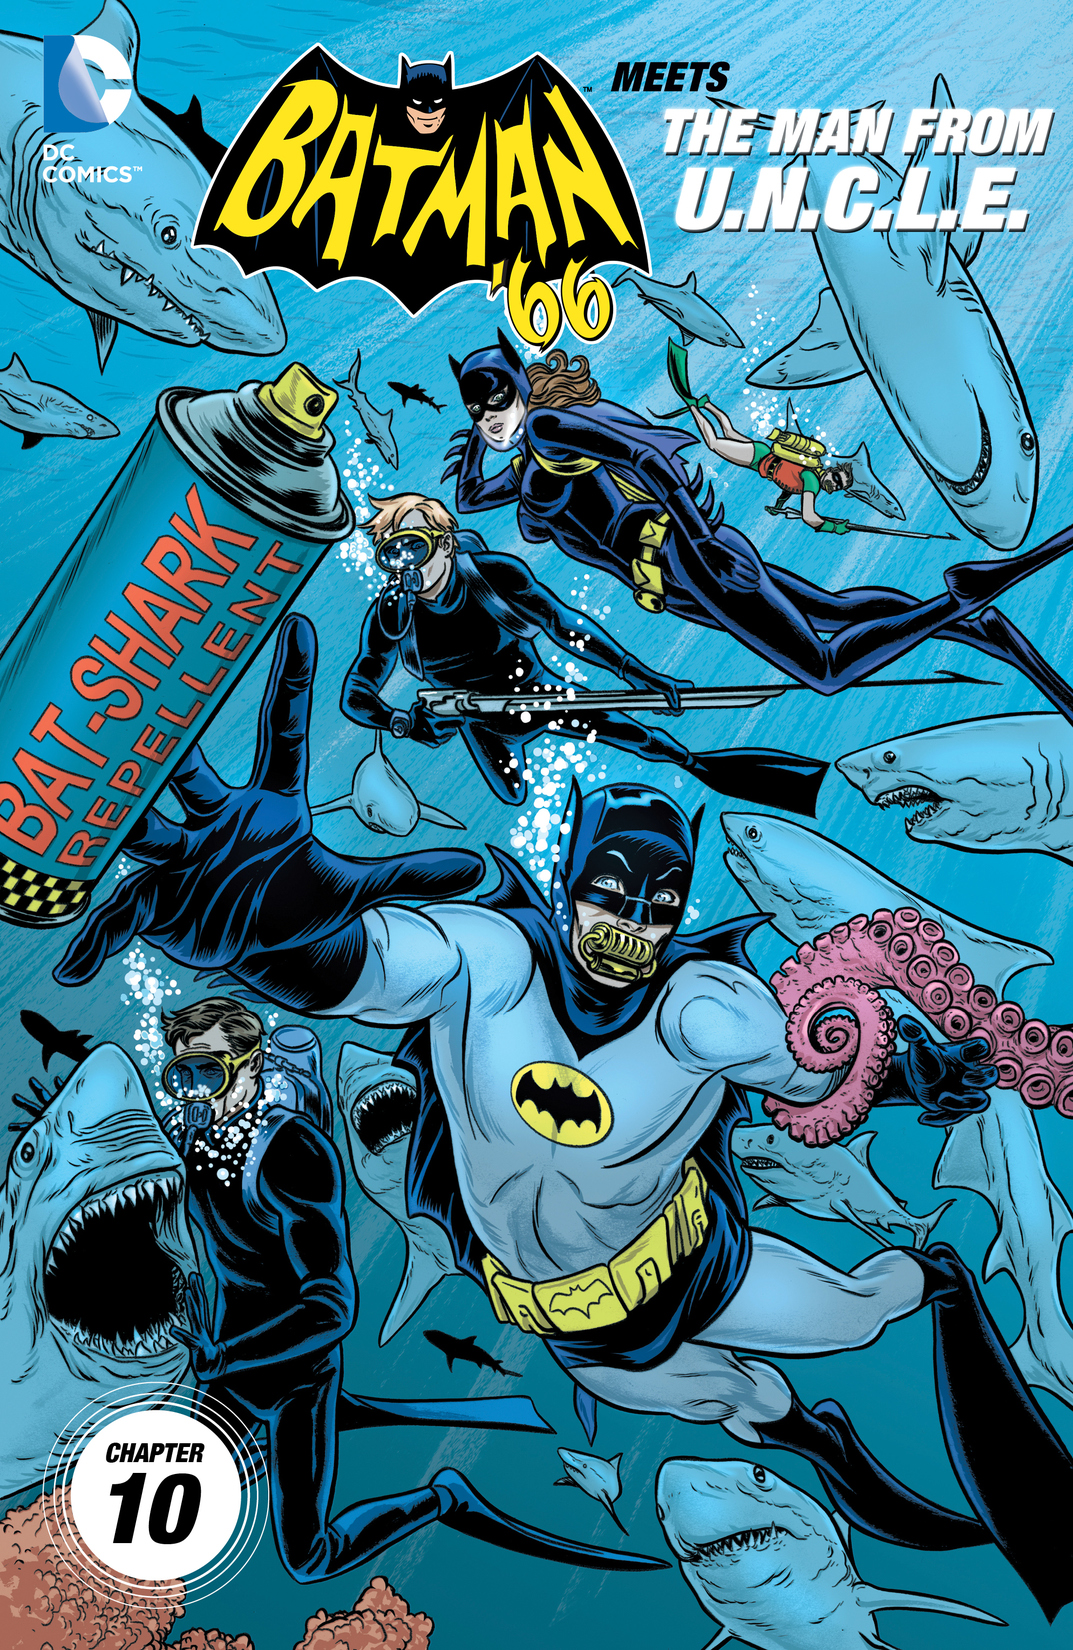 Batman '66 Meets The Man From U.N.C.L.E. #10 preview images